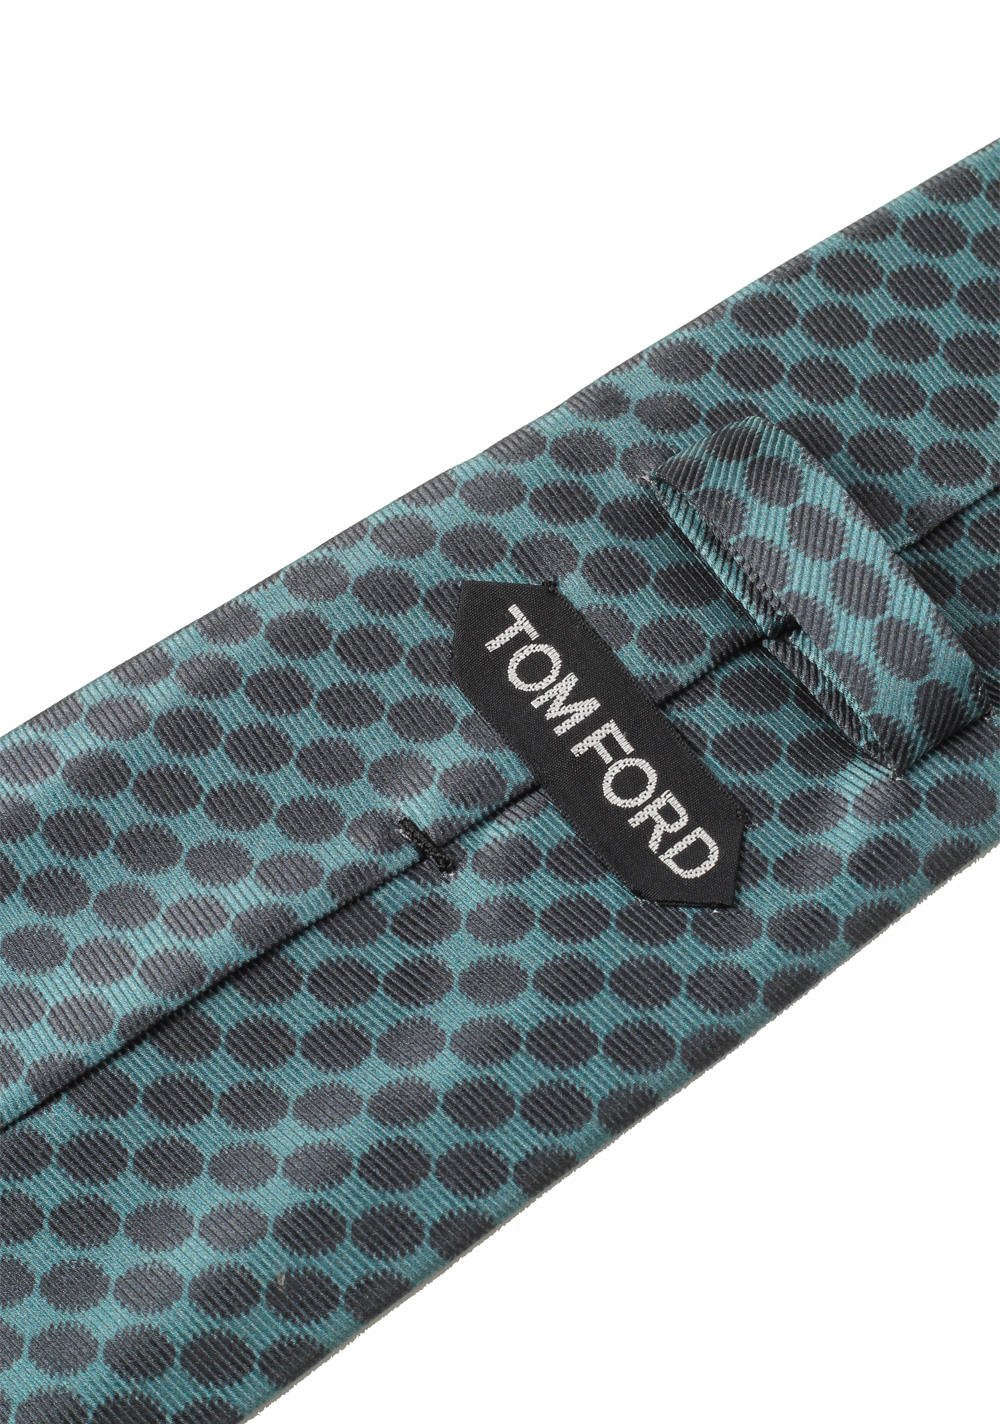 TOM FORD Tie | Costume Limité